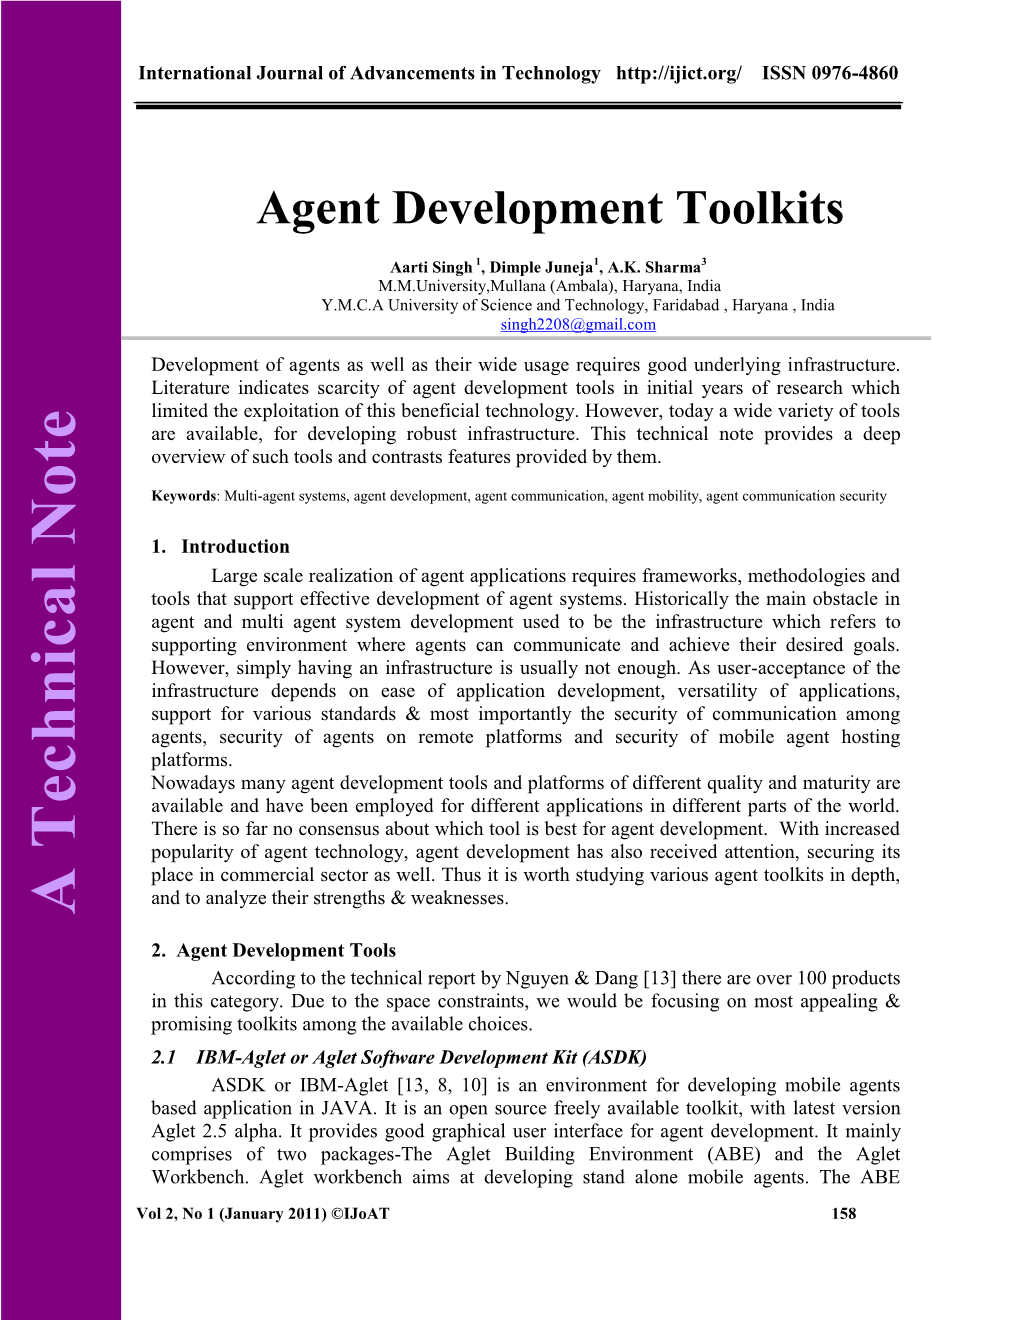 Agent Development Toolkits